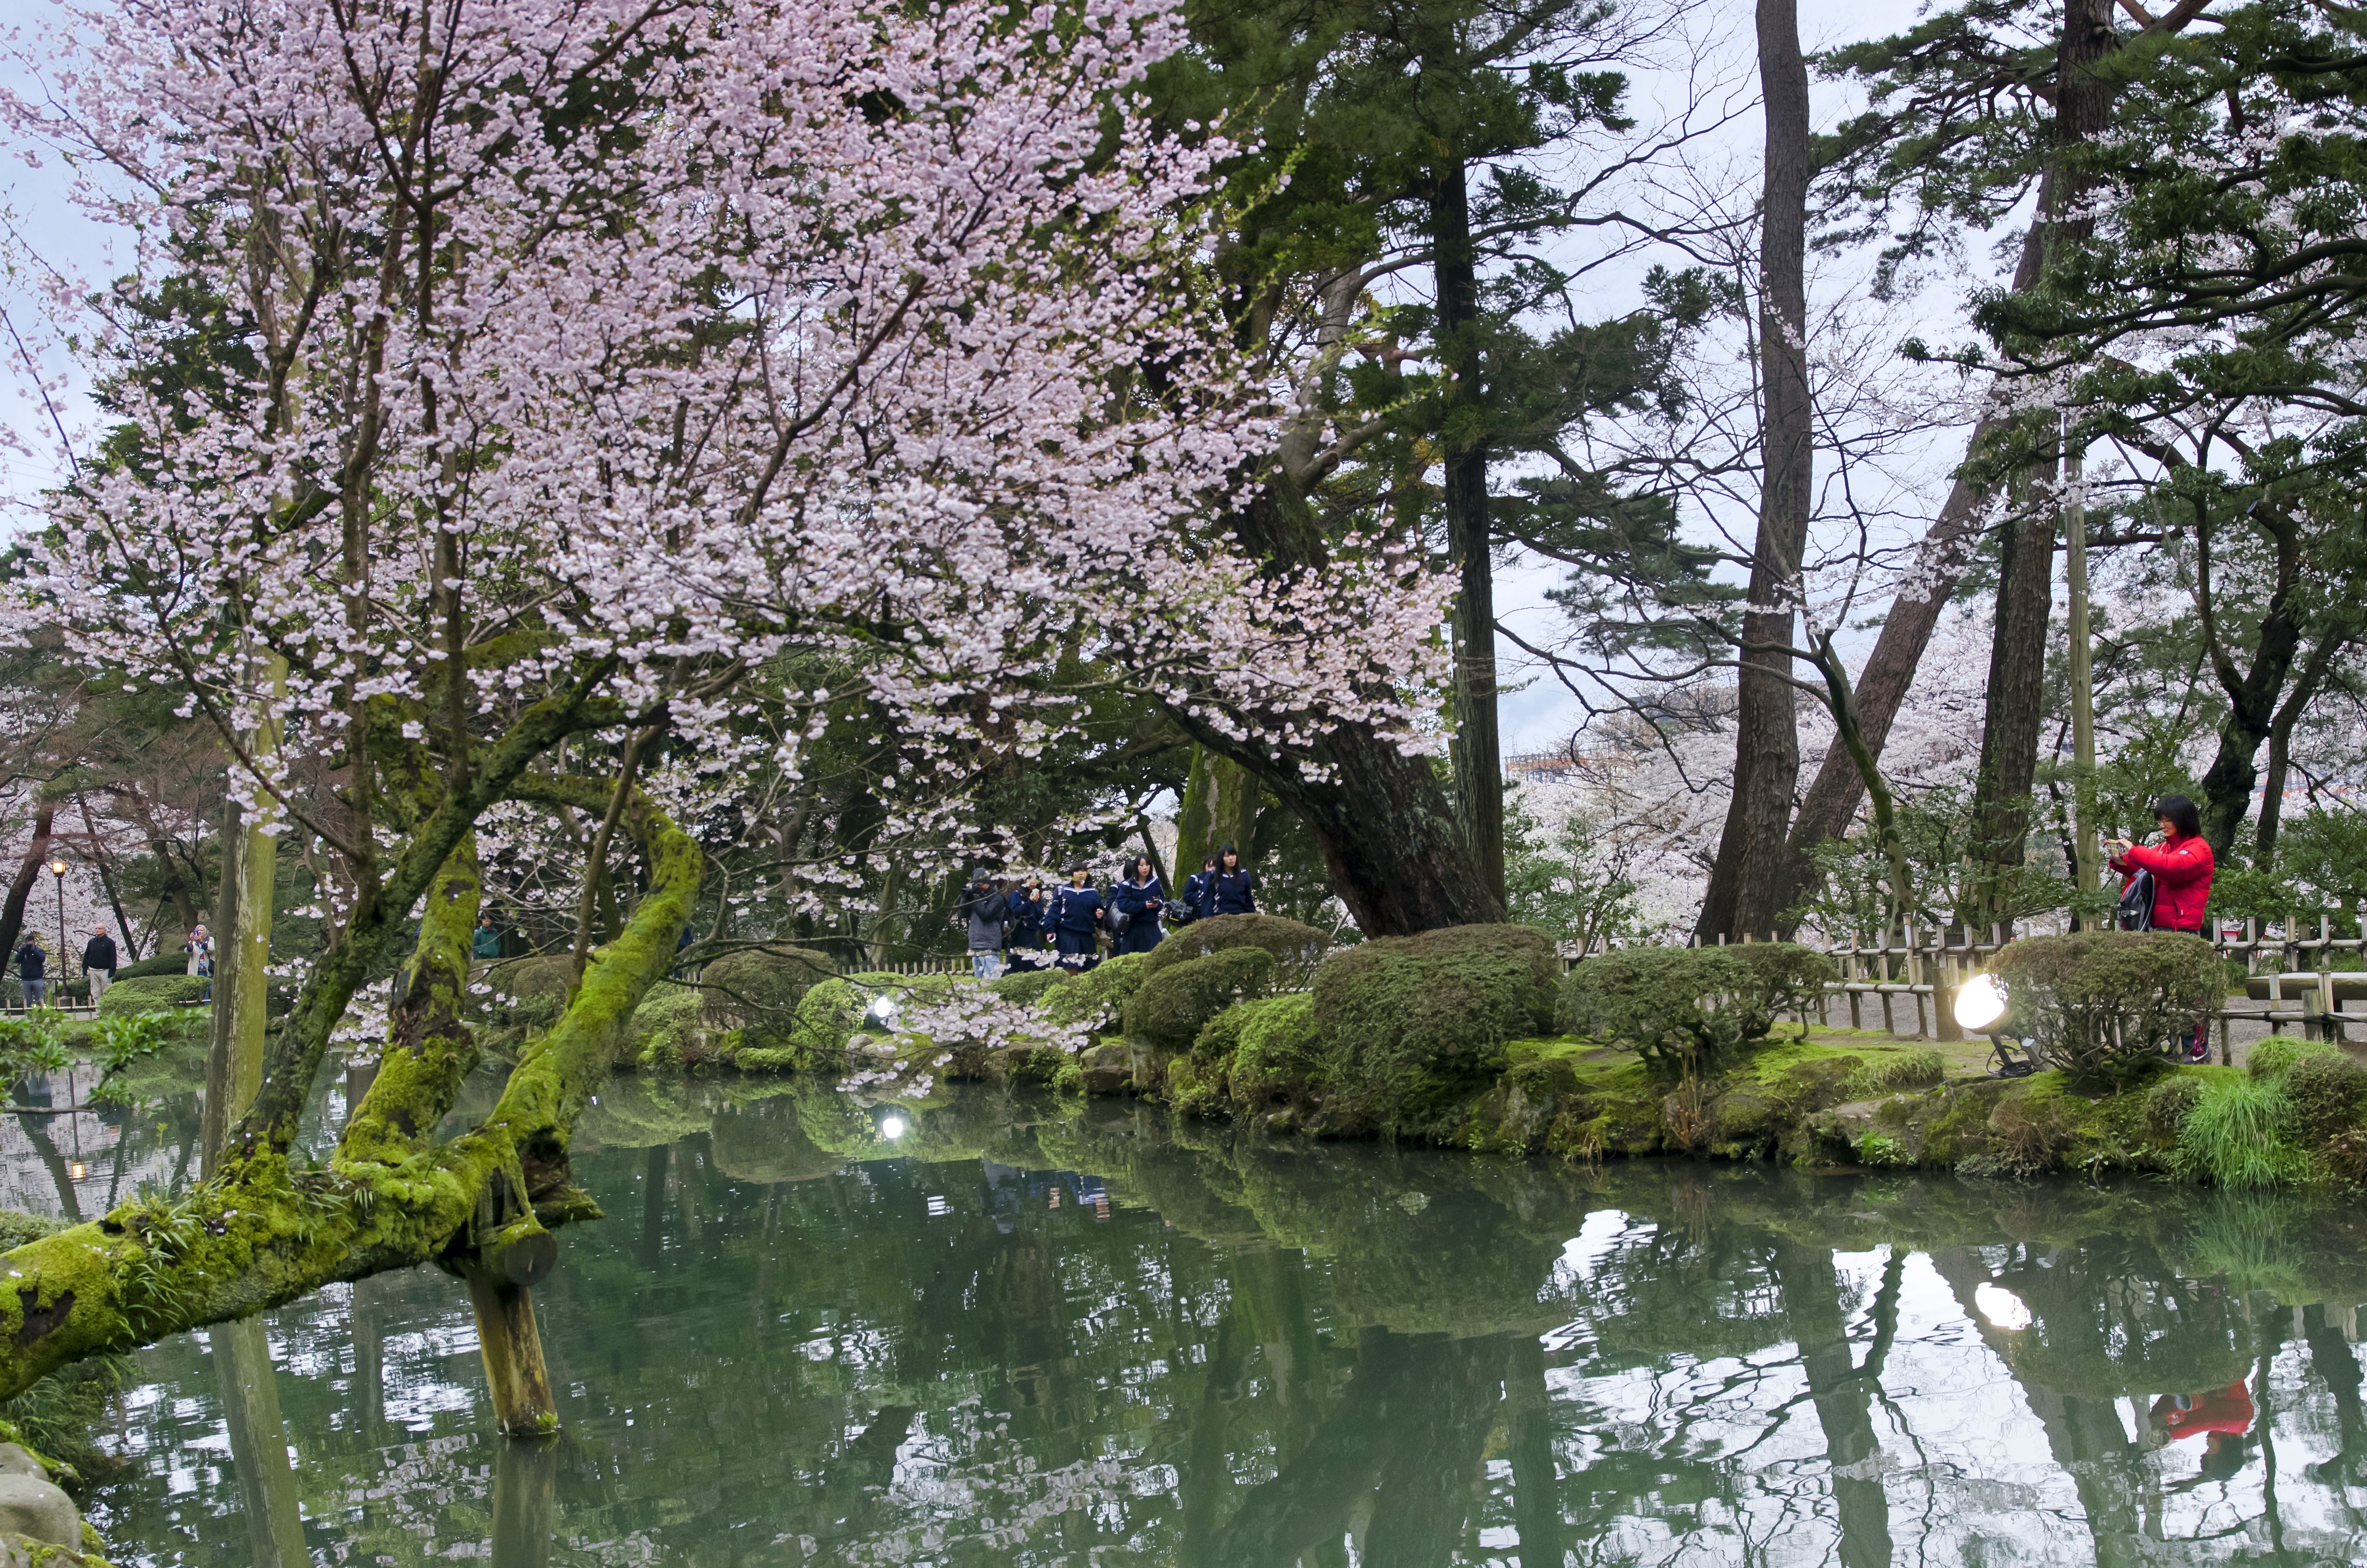 Cherry blossom view at the famous Kenrokuen Garden, Kanazawa